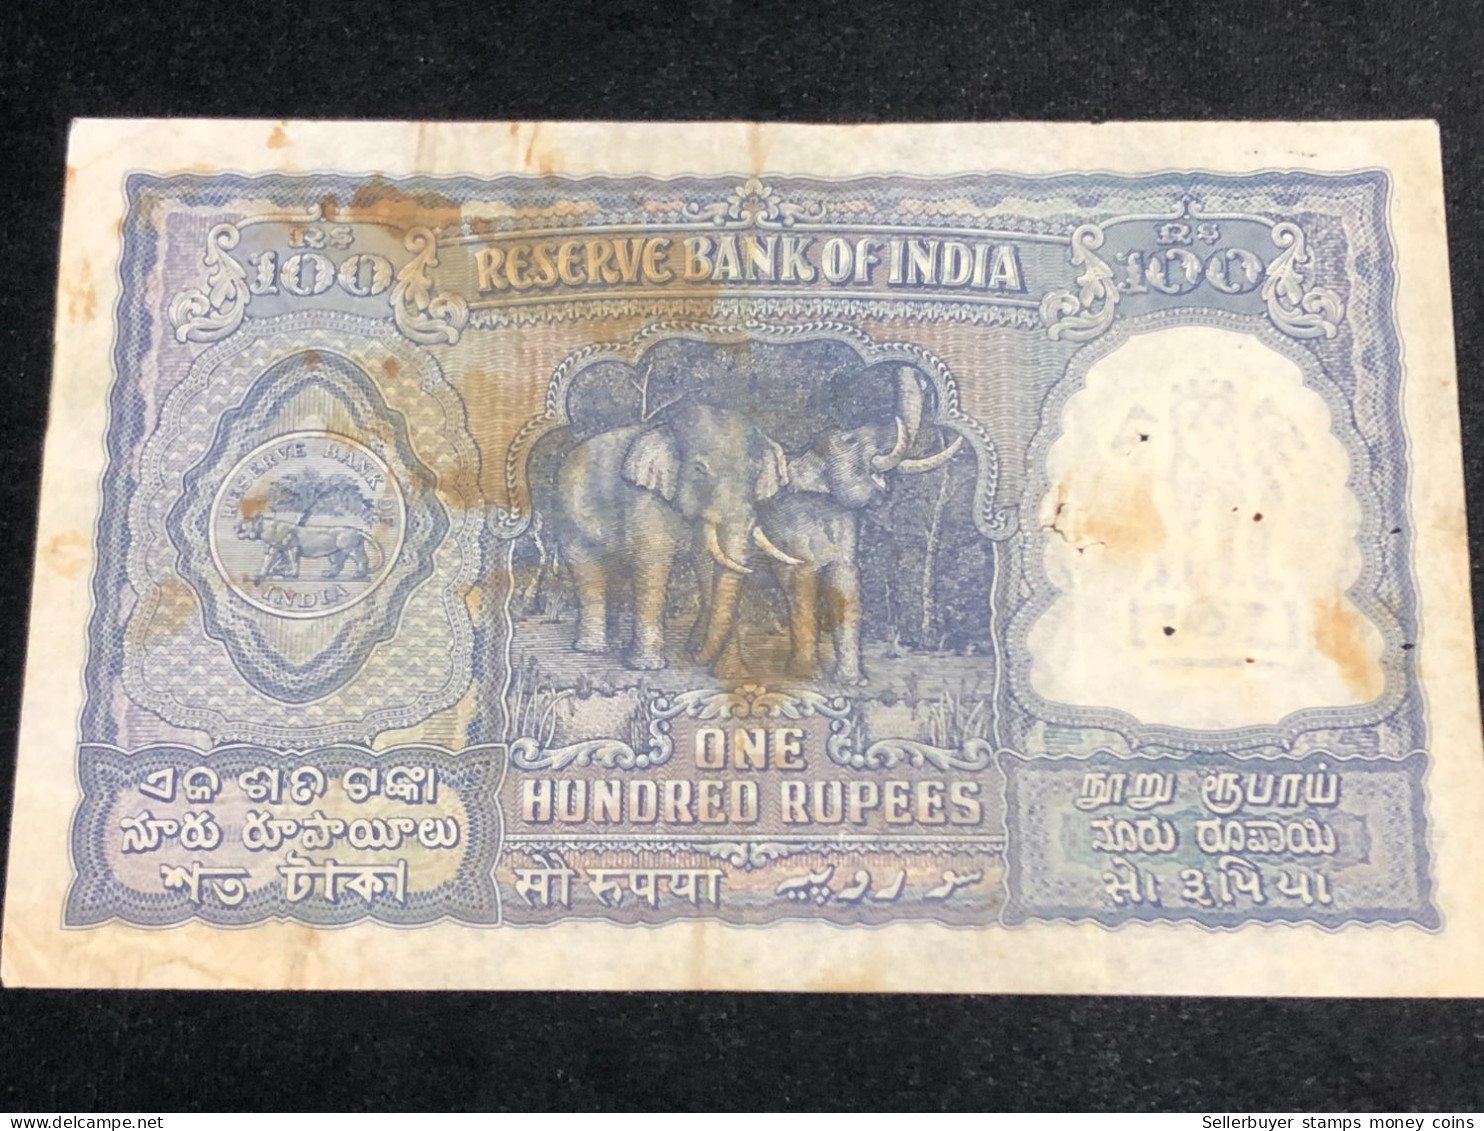 INDIA 100 RUPEES P-43  1957 TIGER ELEPHANT DAM MONEY BILL Rhas Pinhole ARE BANK NOTE Black Number Below 1 Pcs Au Very Ra - India